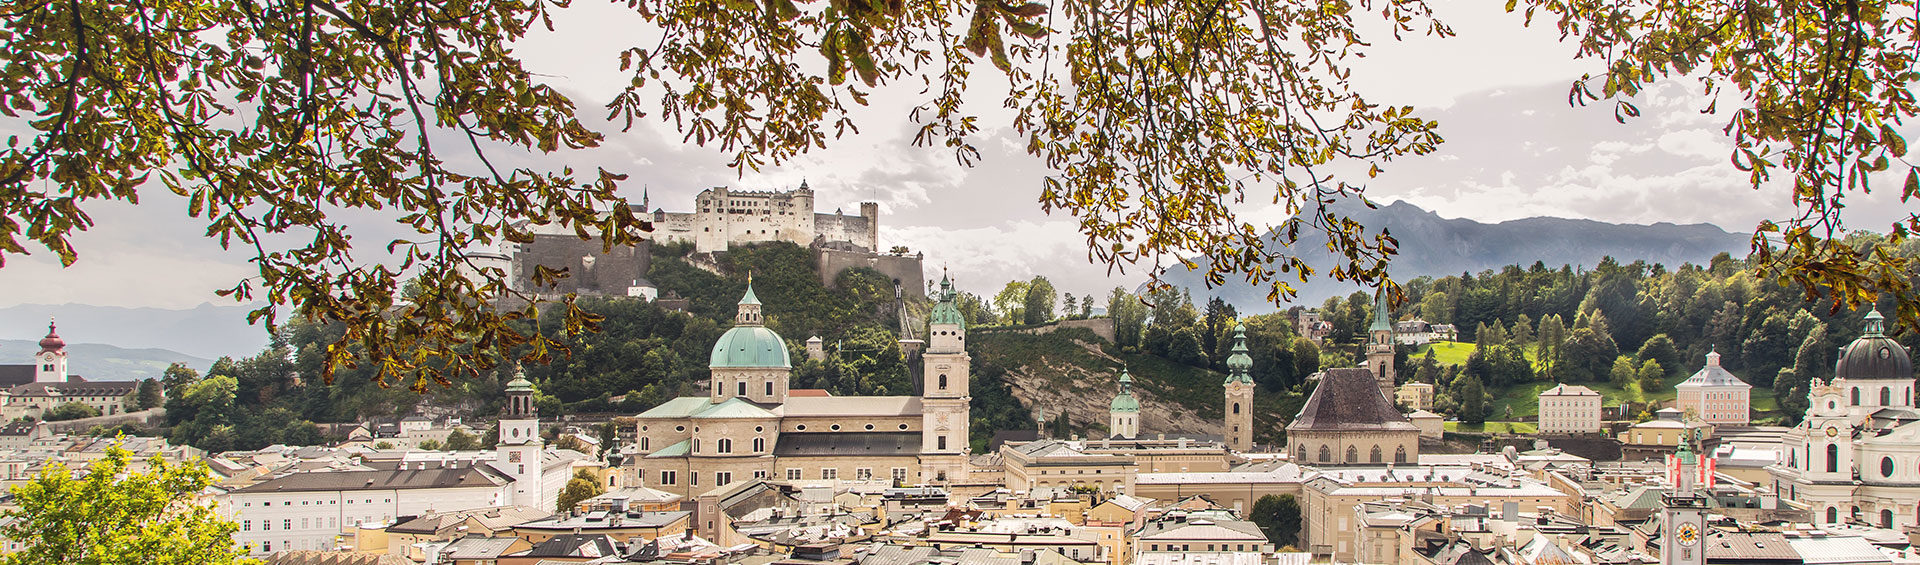 Ausflugsziel im Salzburger Land, Altstadt Salzburg